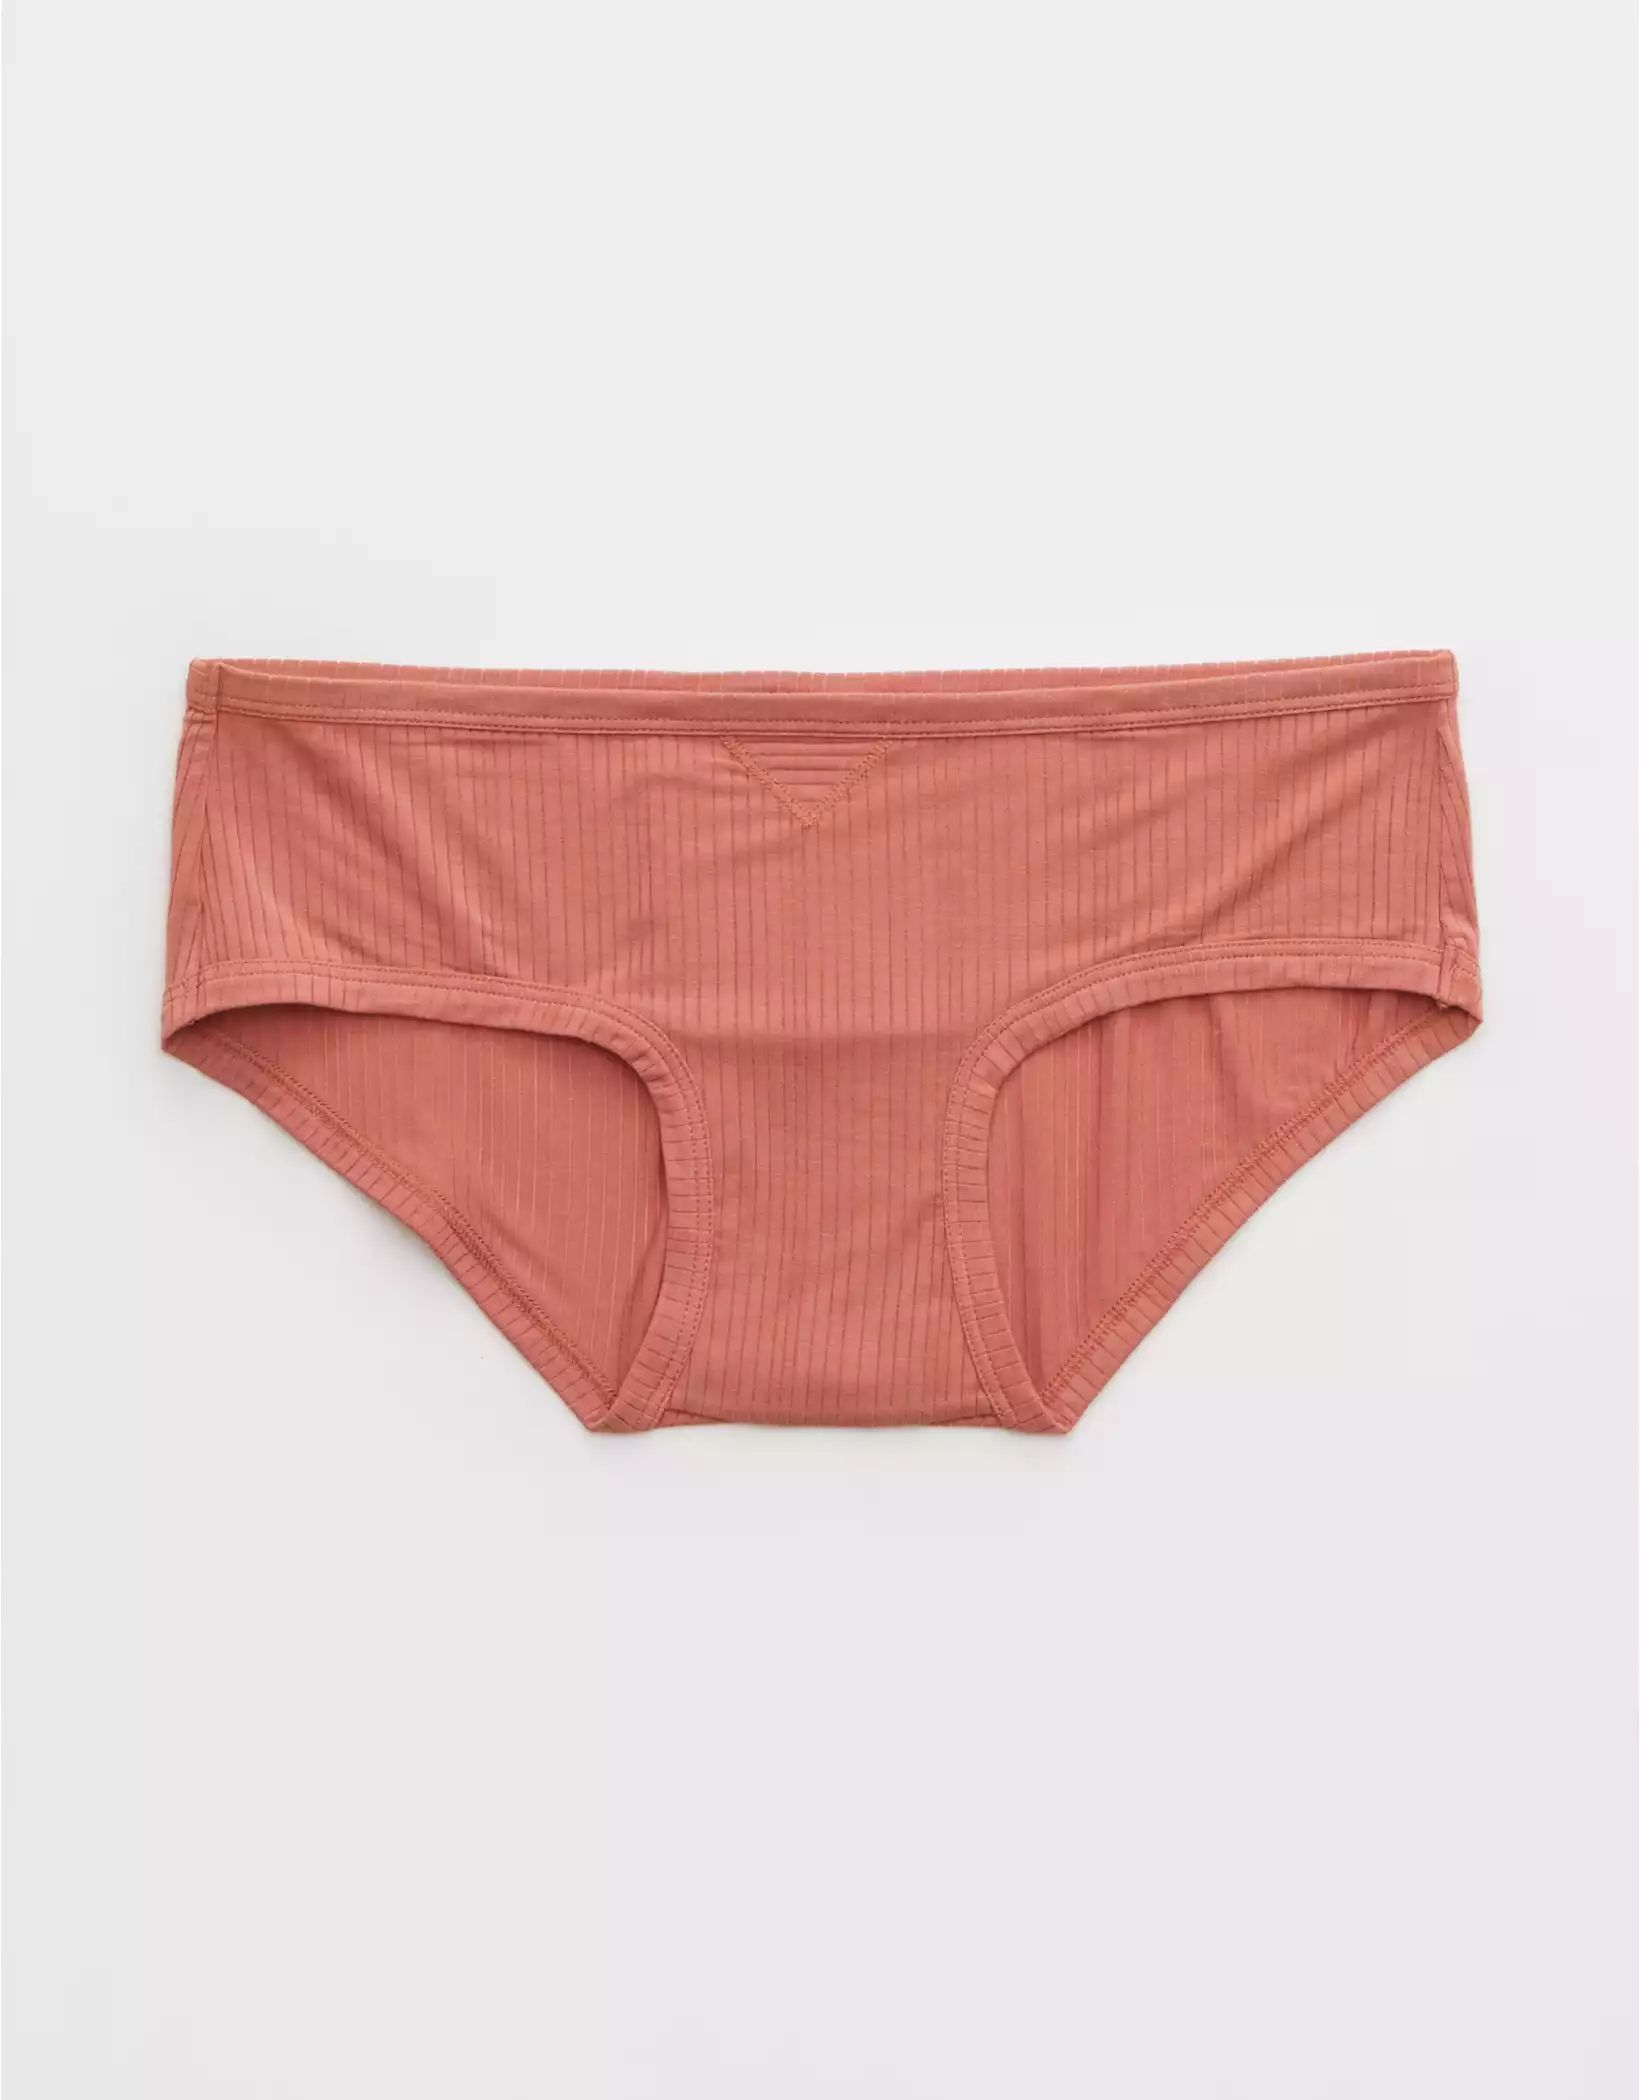 Aerie Modal Ribbed Boybrief Underwear | Aerie